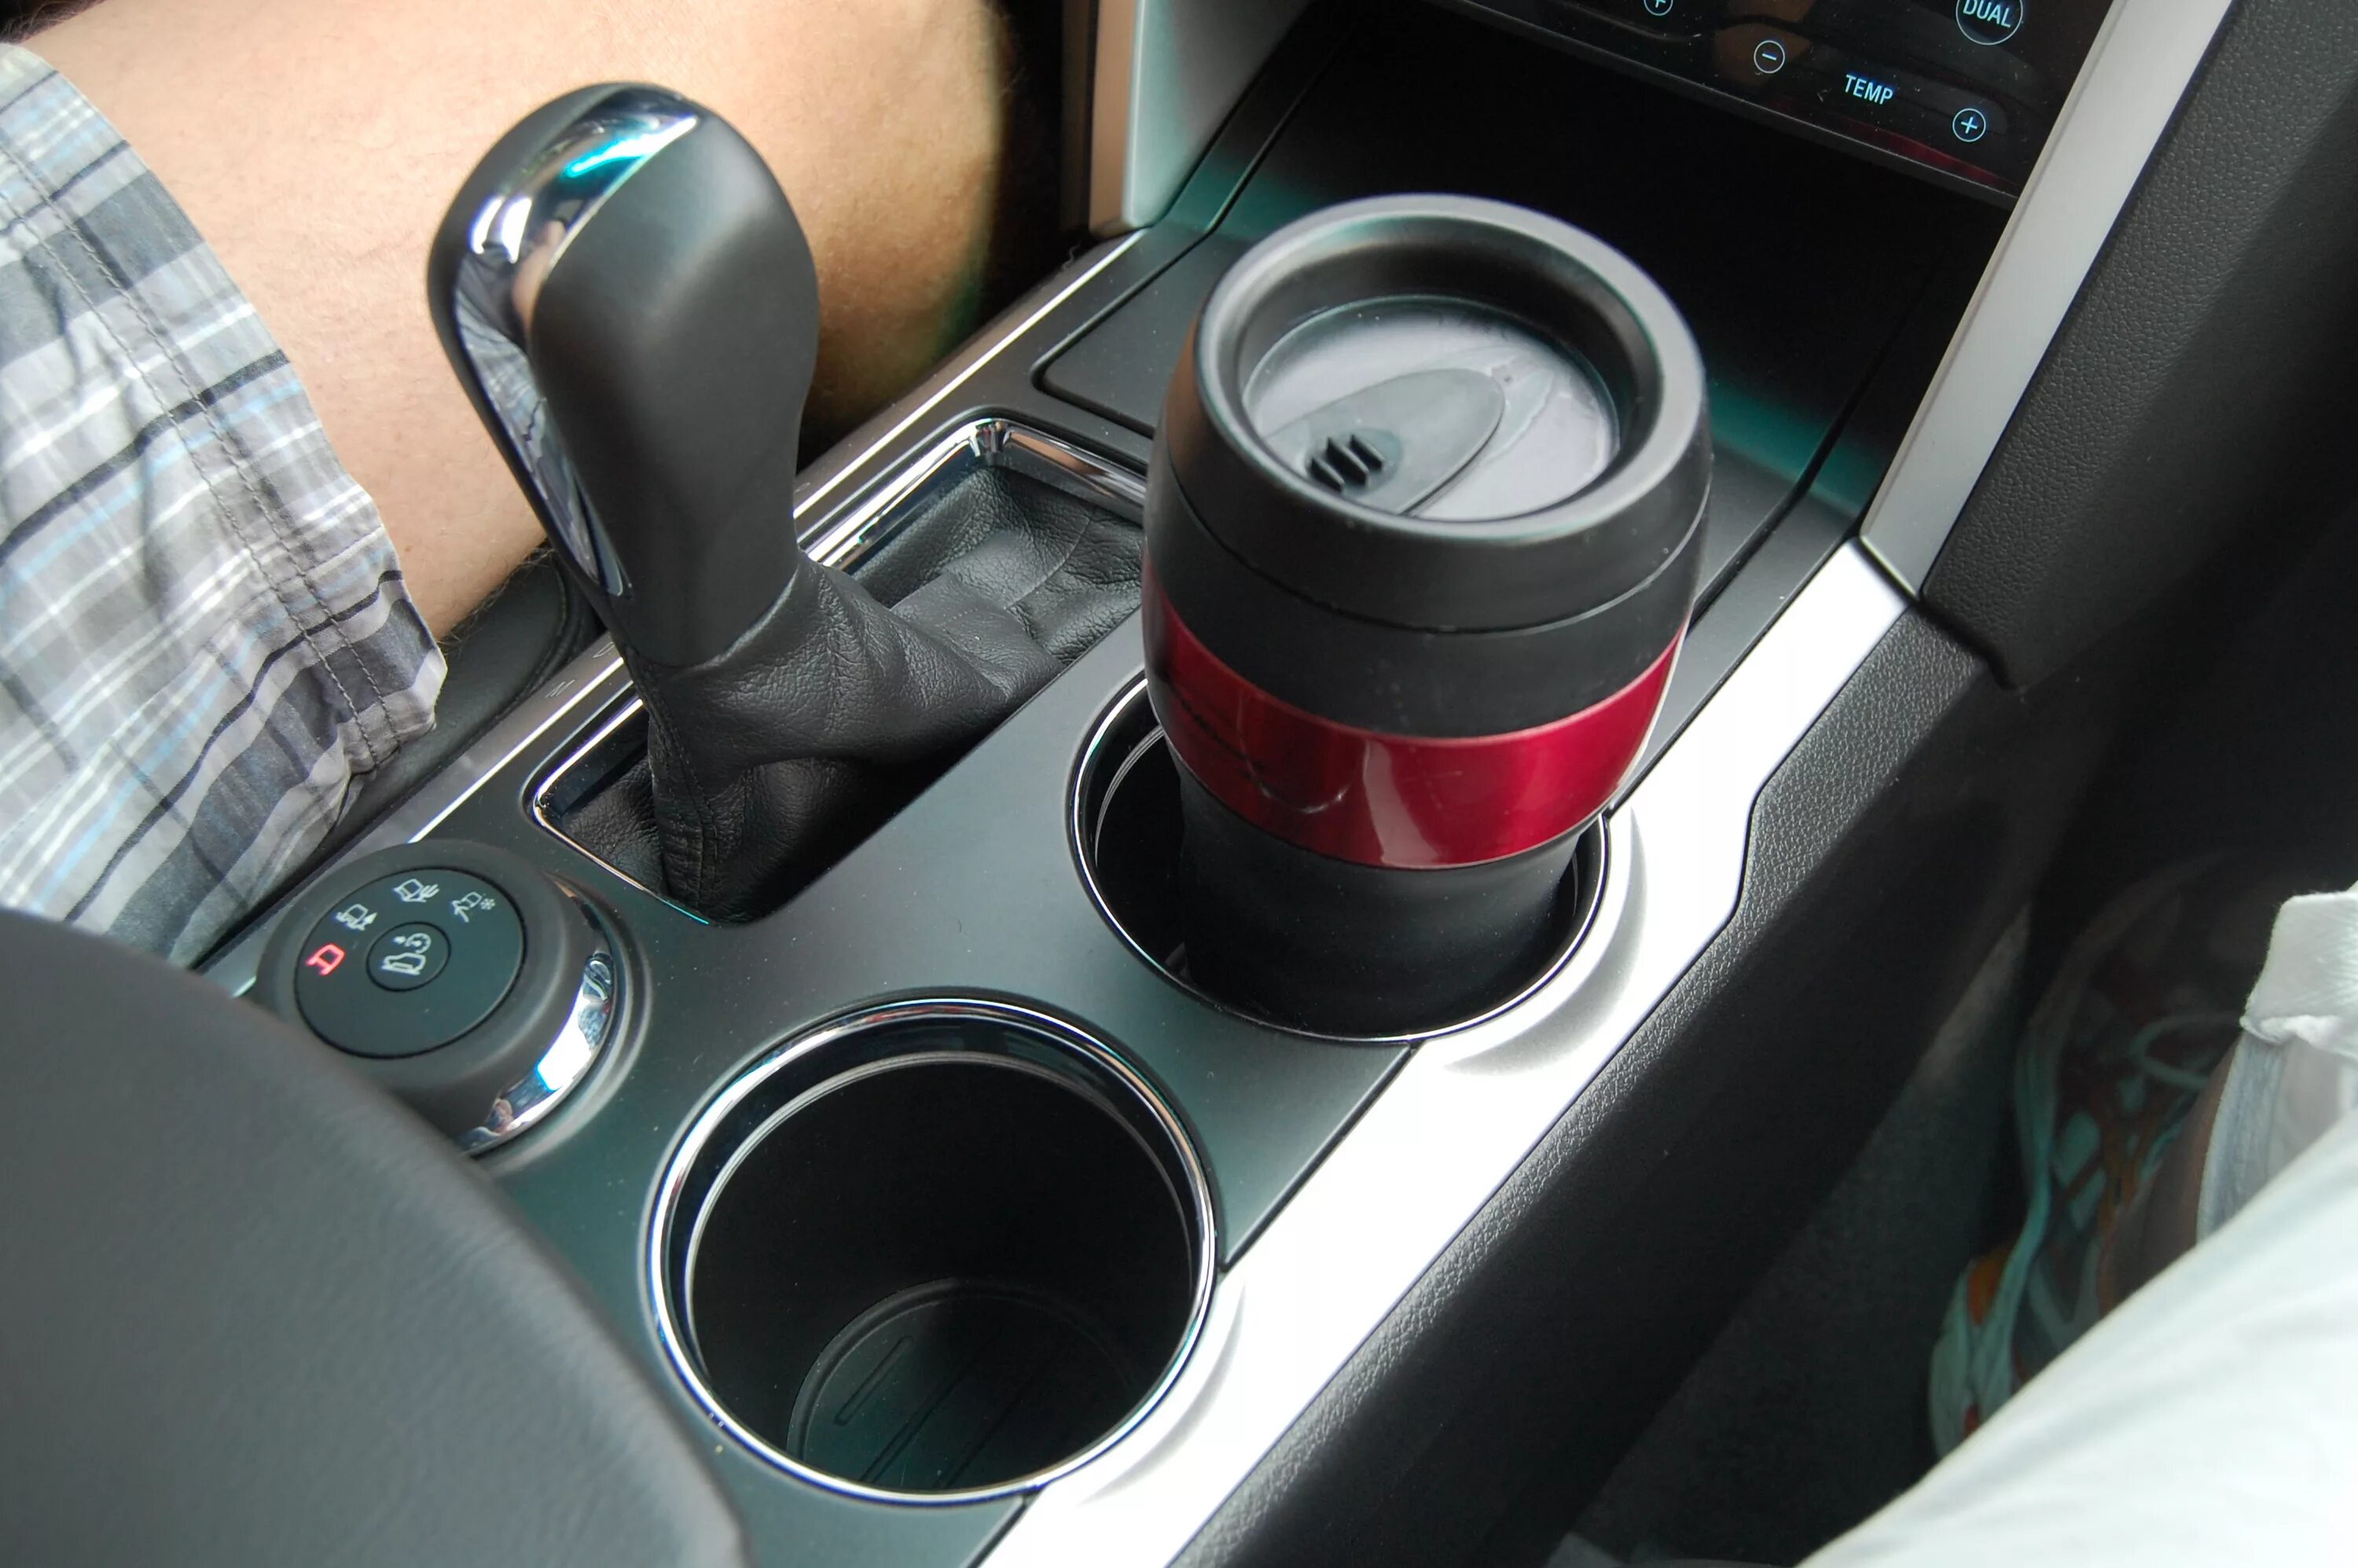 Cup Holder (кап-холдер). Подстаканник электрический Smart Cup Holder 69036170. BMW Phone Holder Cup Holder. Предметы в салоне автомобиля.